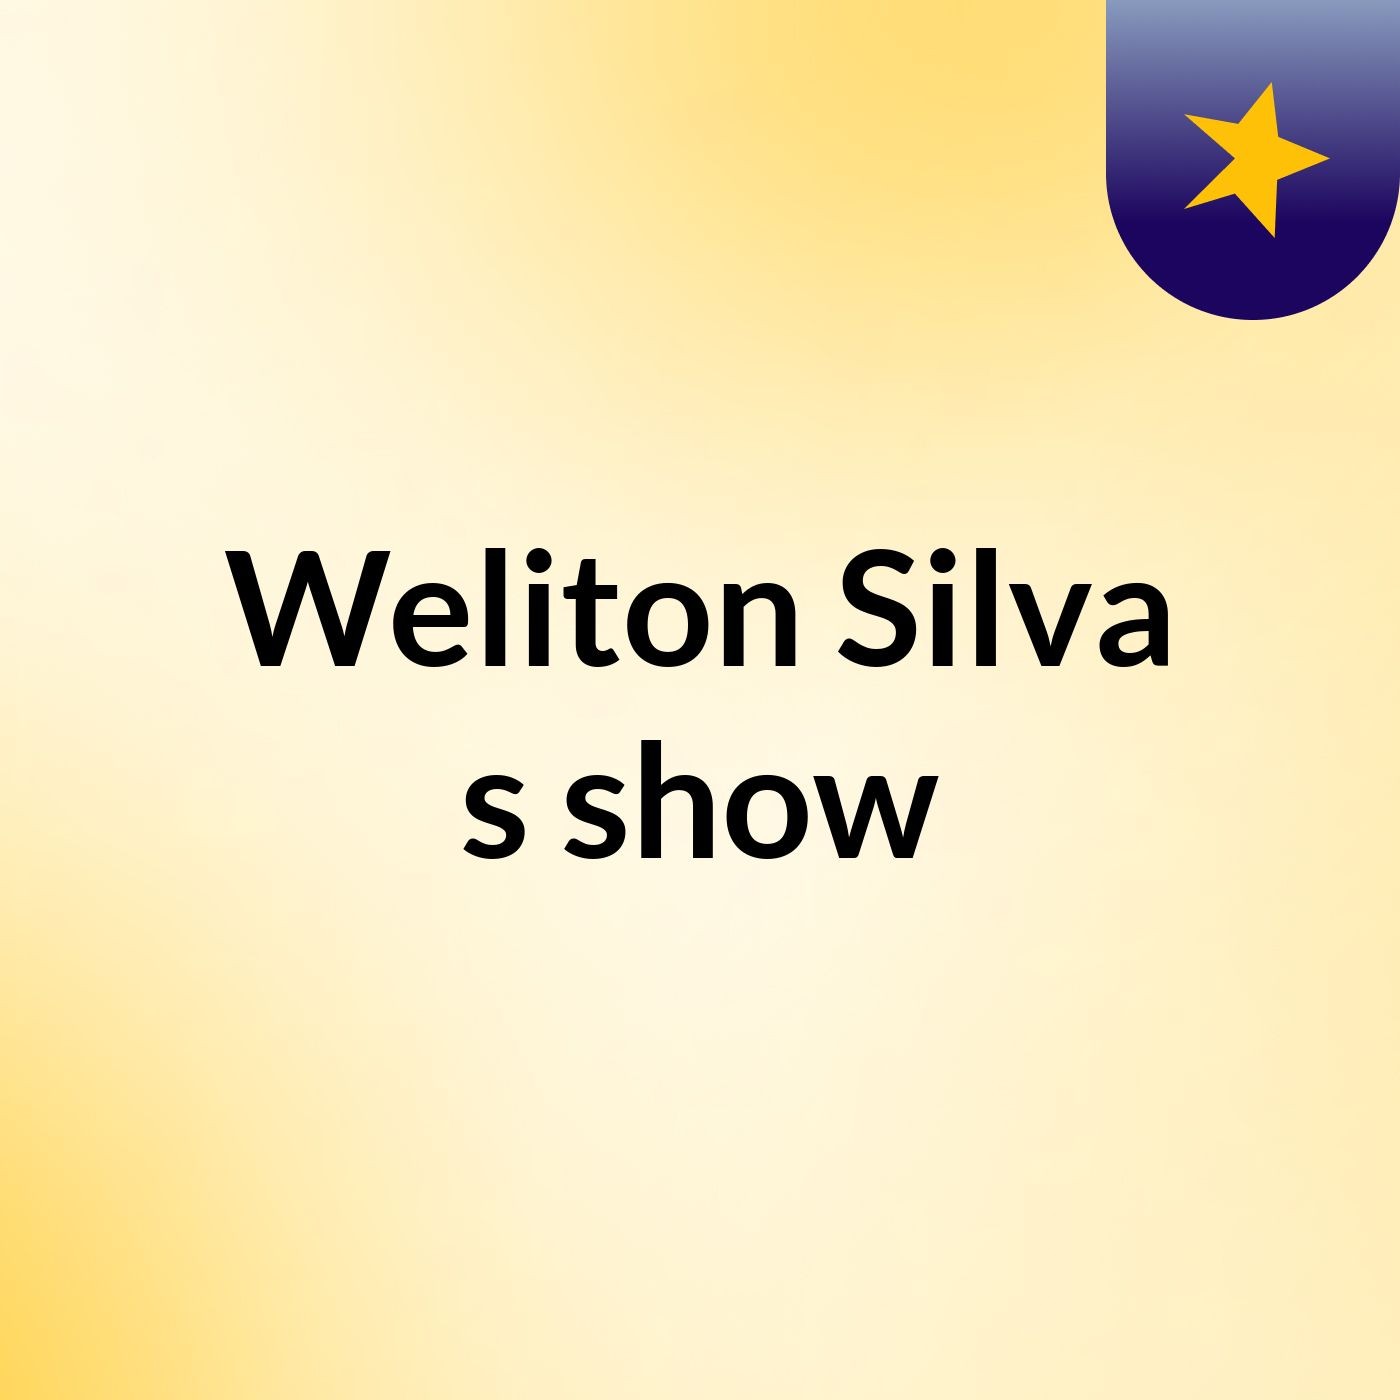 Weliton Silva's show